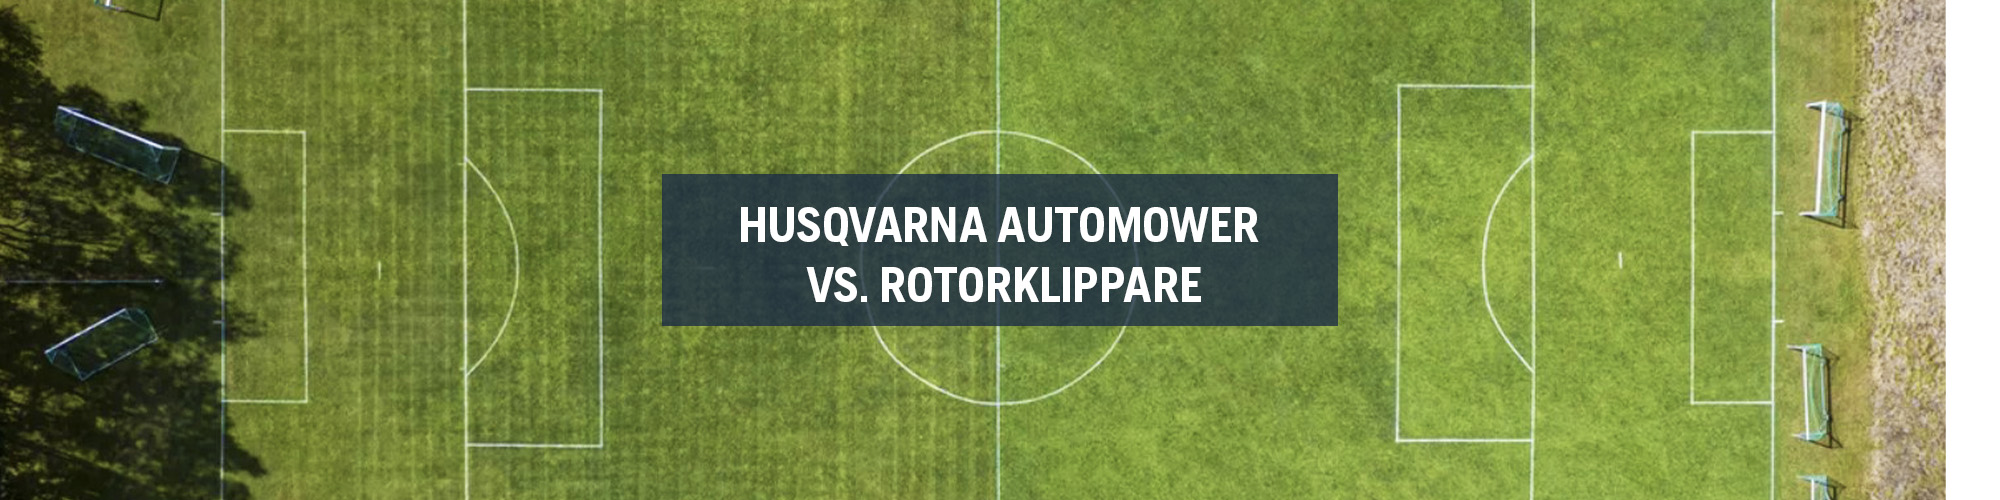 Husqvarna Automower vs. Rotorklippare